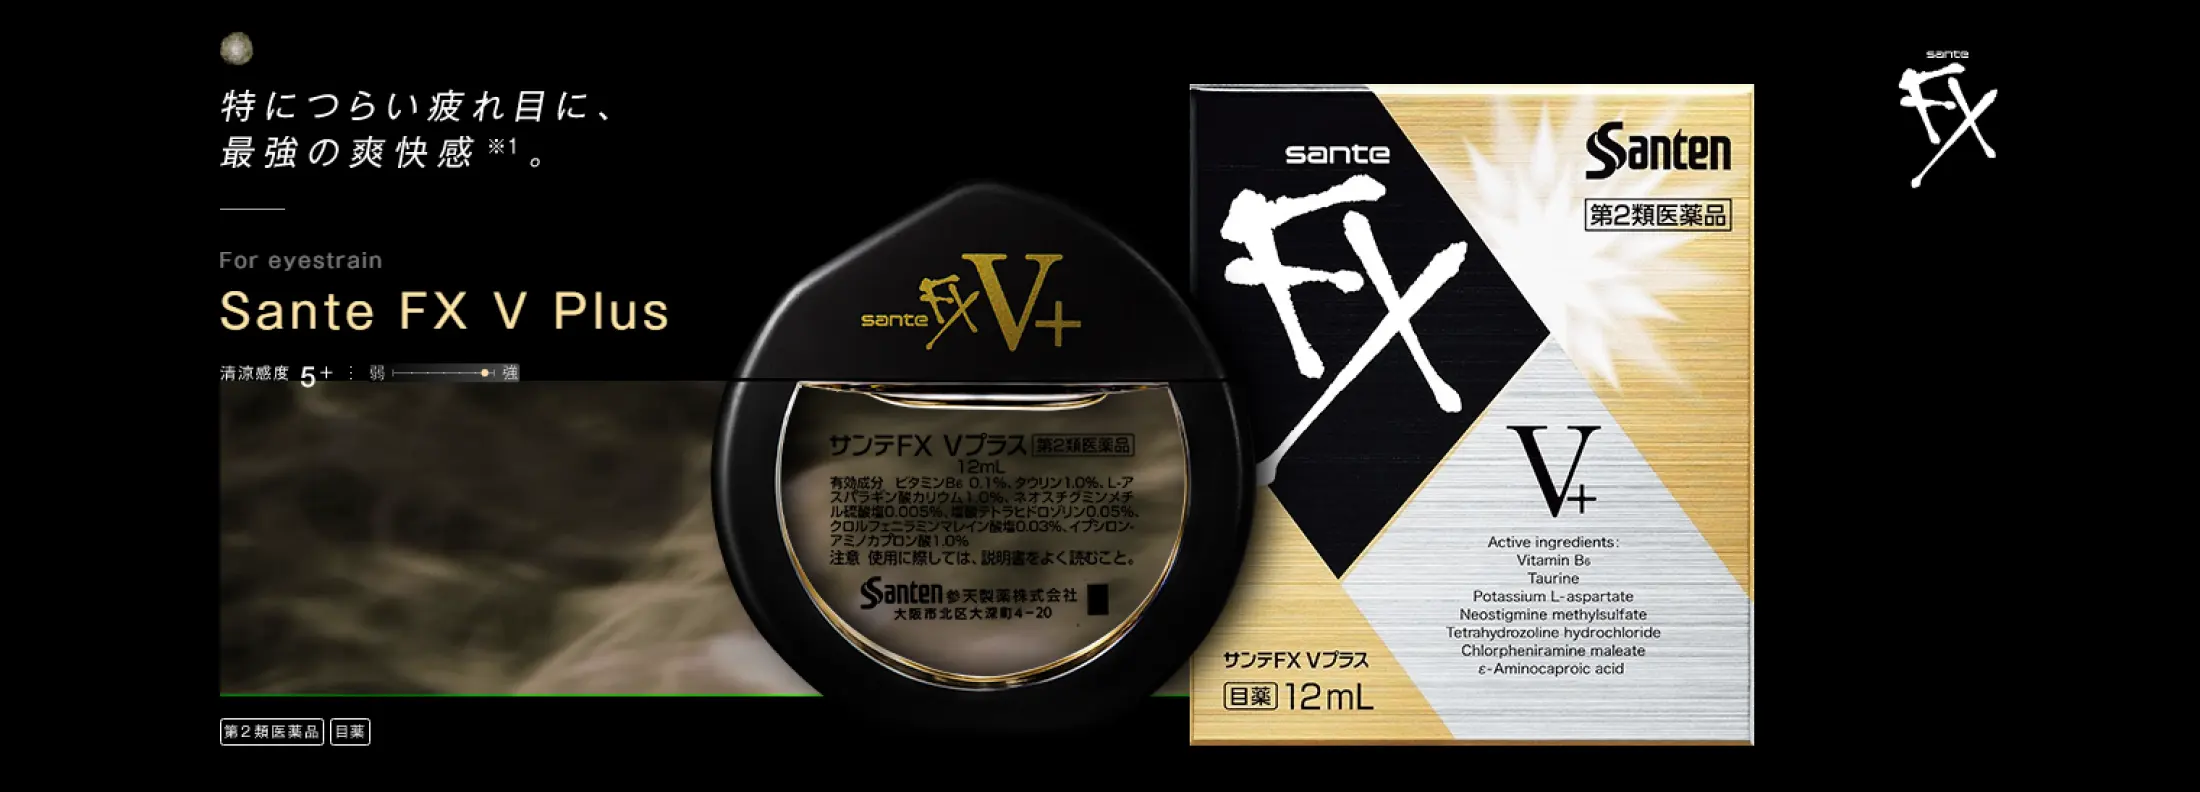 Sante Fx V Plus Cooling Eye Drops New Packaging 12ml Lazada Ph